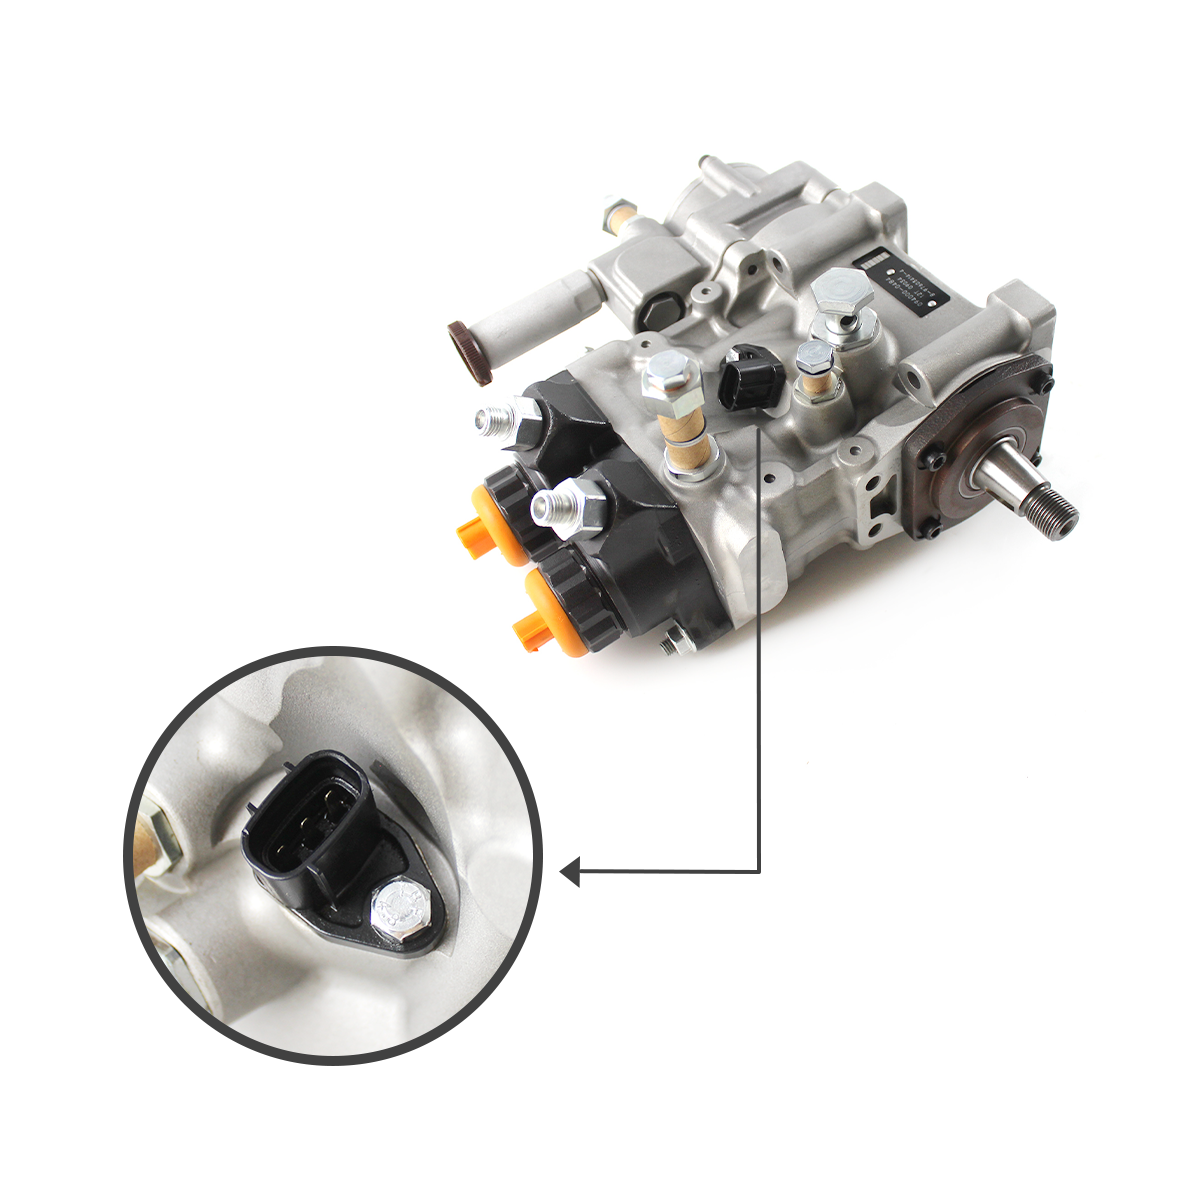 094000-0571 094000-0574  Fuel Injection Pump for Komatsu PC400-8 PC450-8